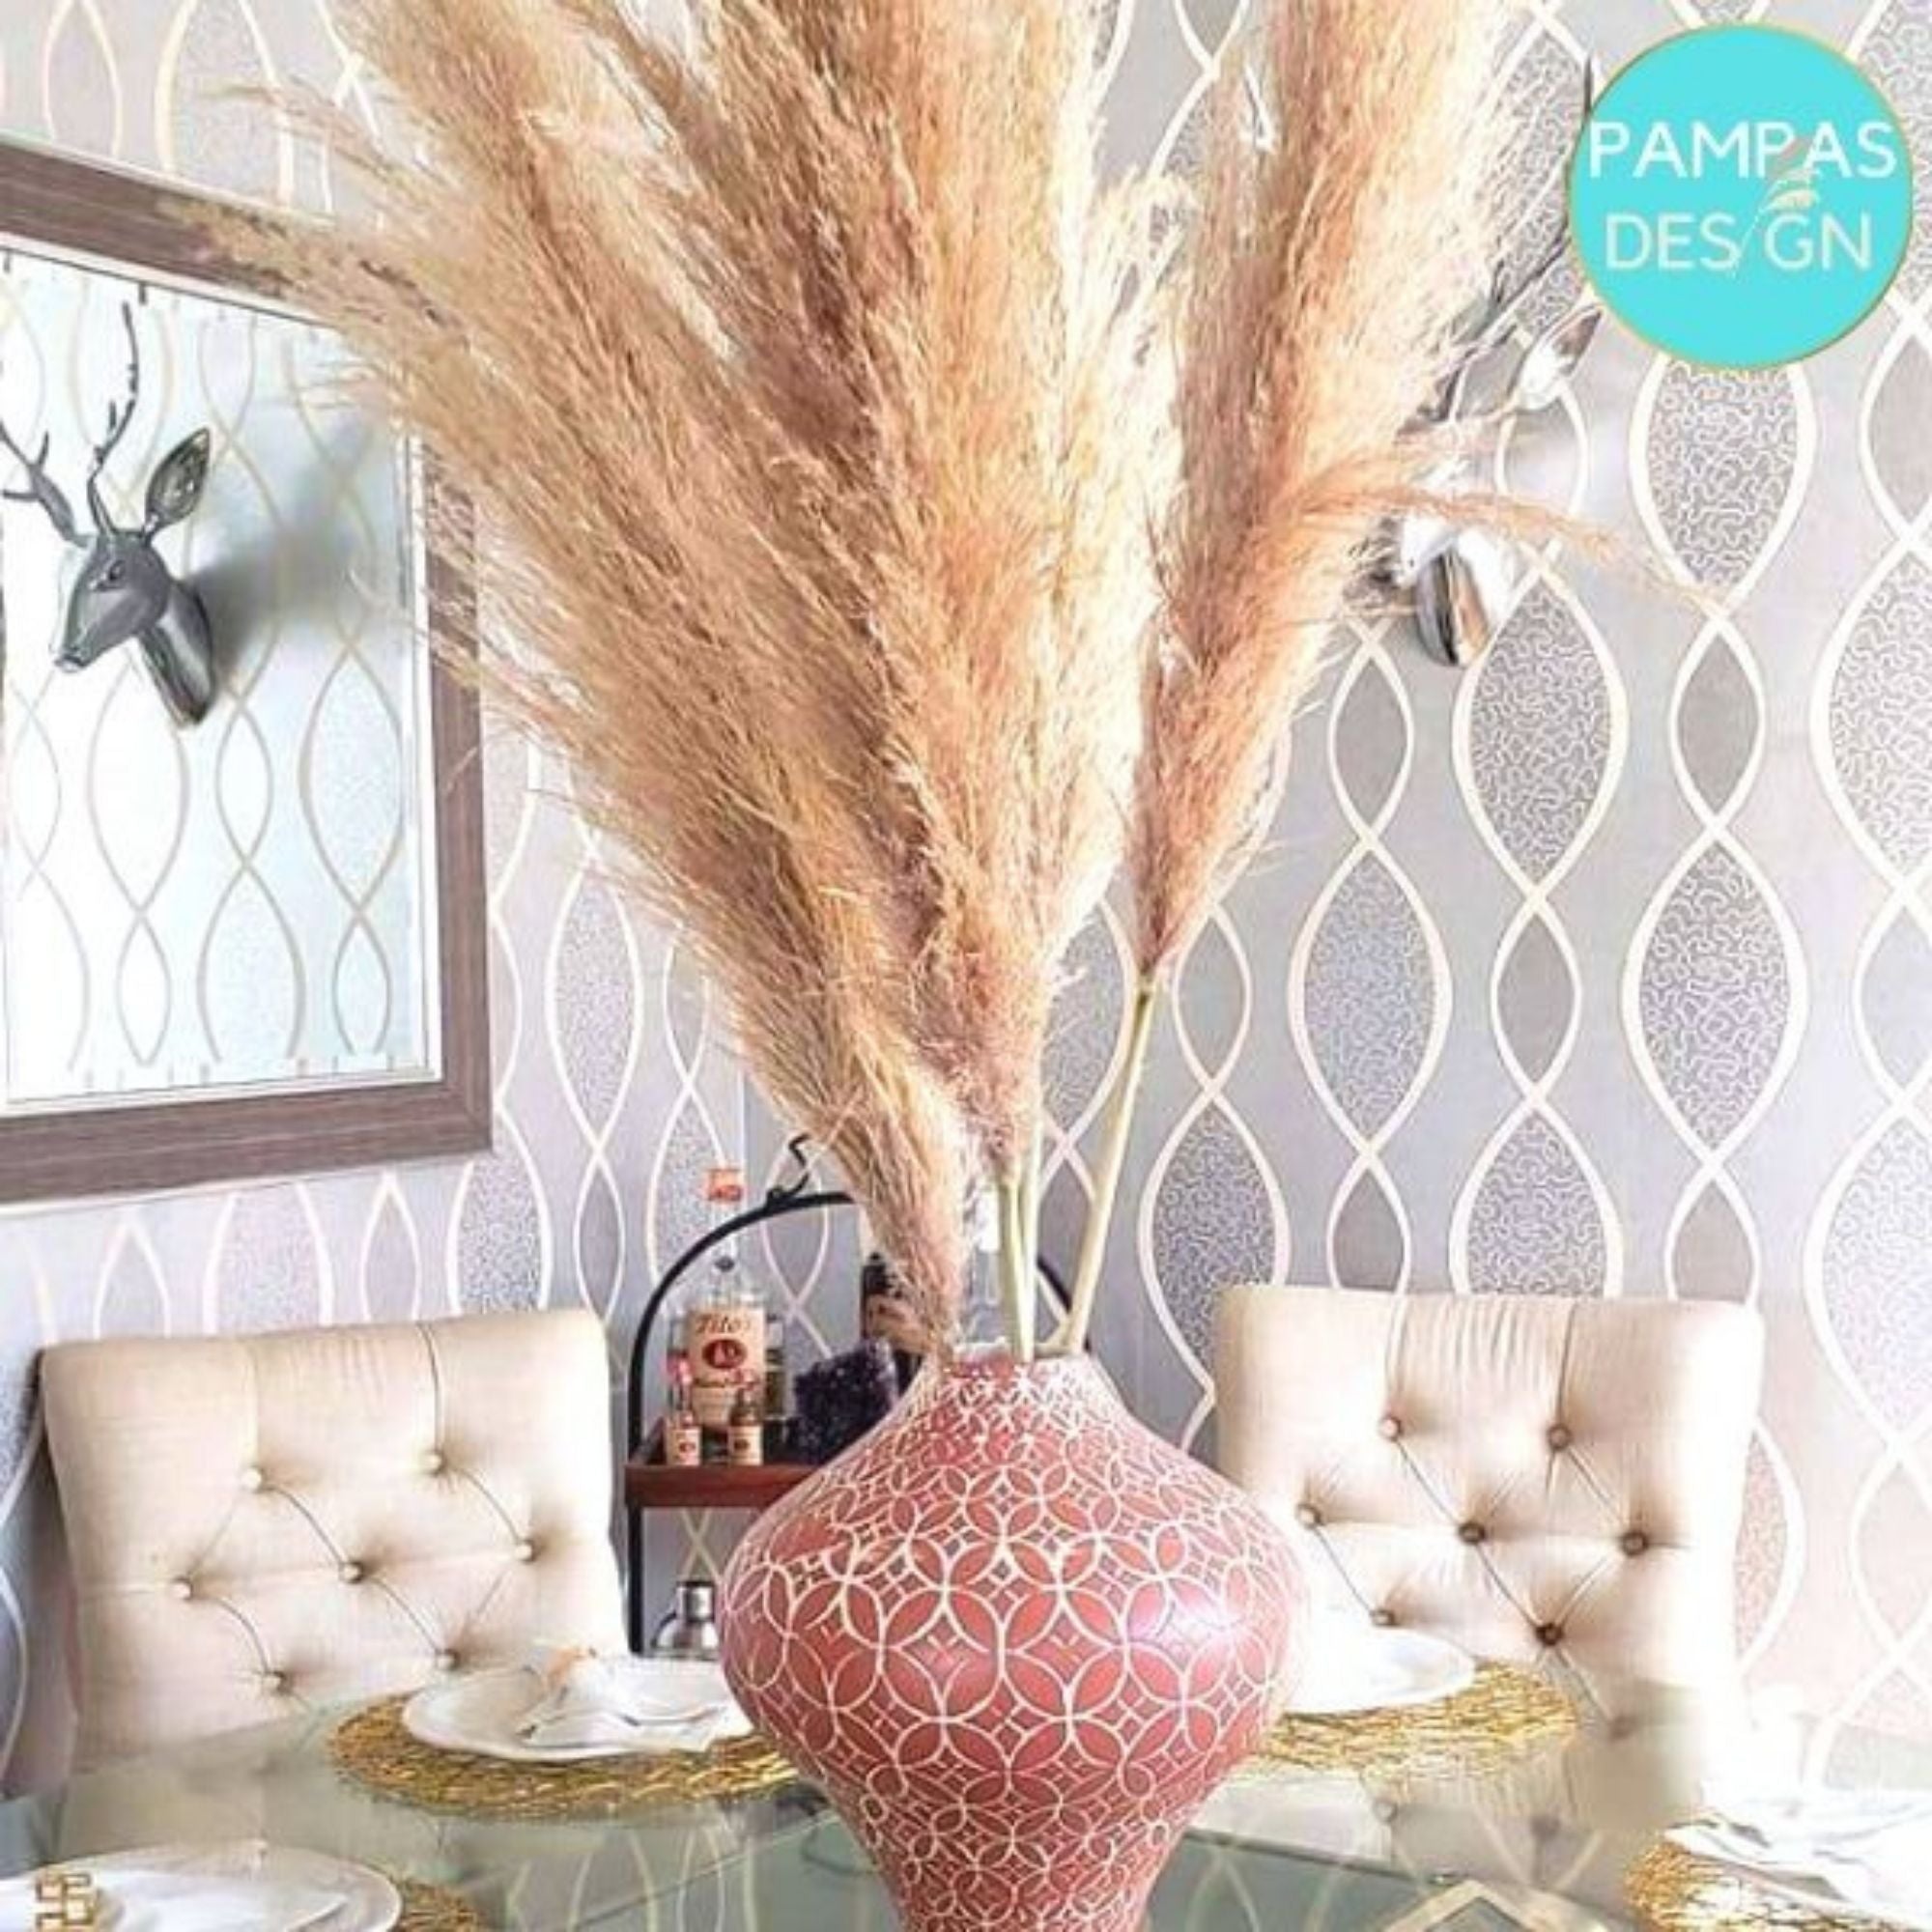 Pampas Design: How Do You Arrange Dry Pampas Grass In A Vase? | Pampas Design